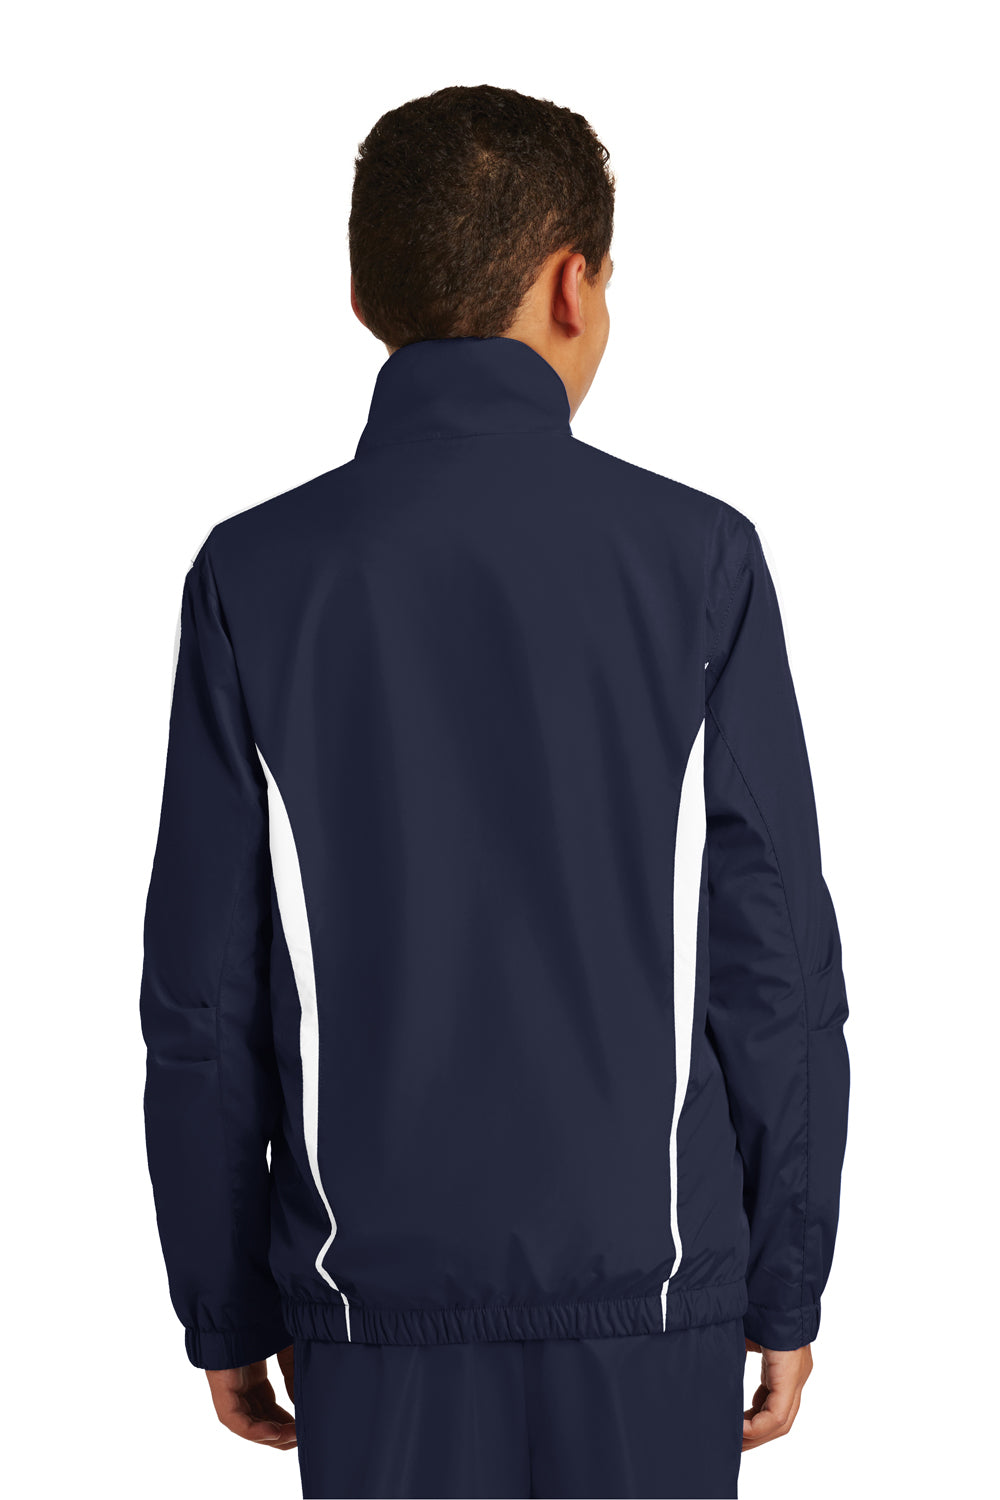 Sport-Tek YST60 Youth Water Resistant Full Zip Jacket Navy Blue/White Back